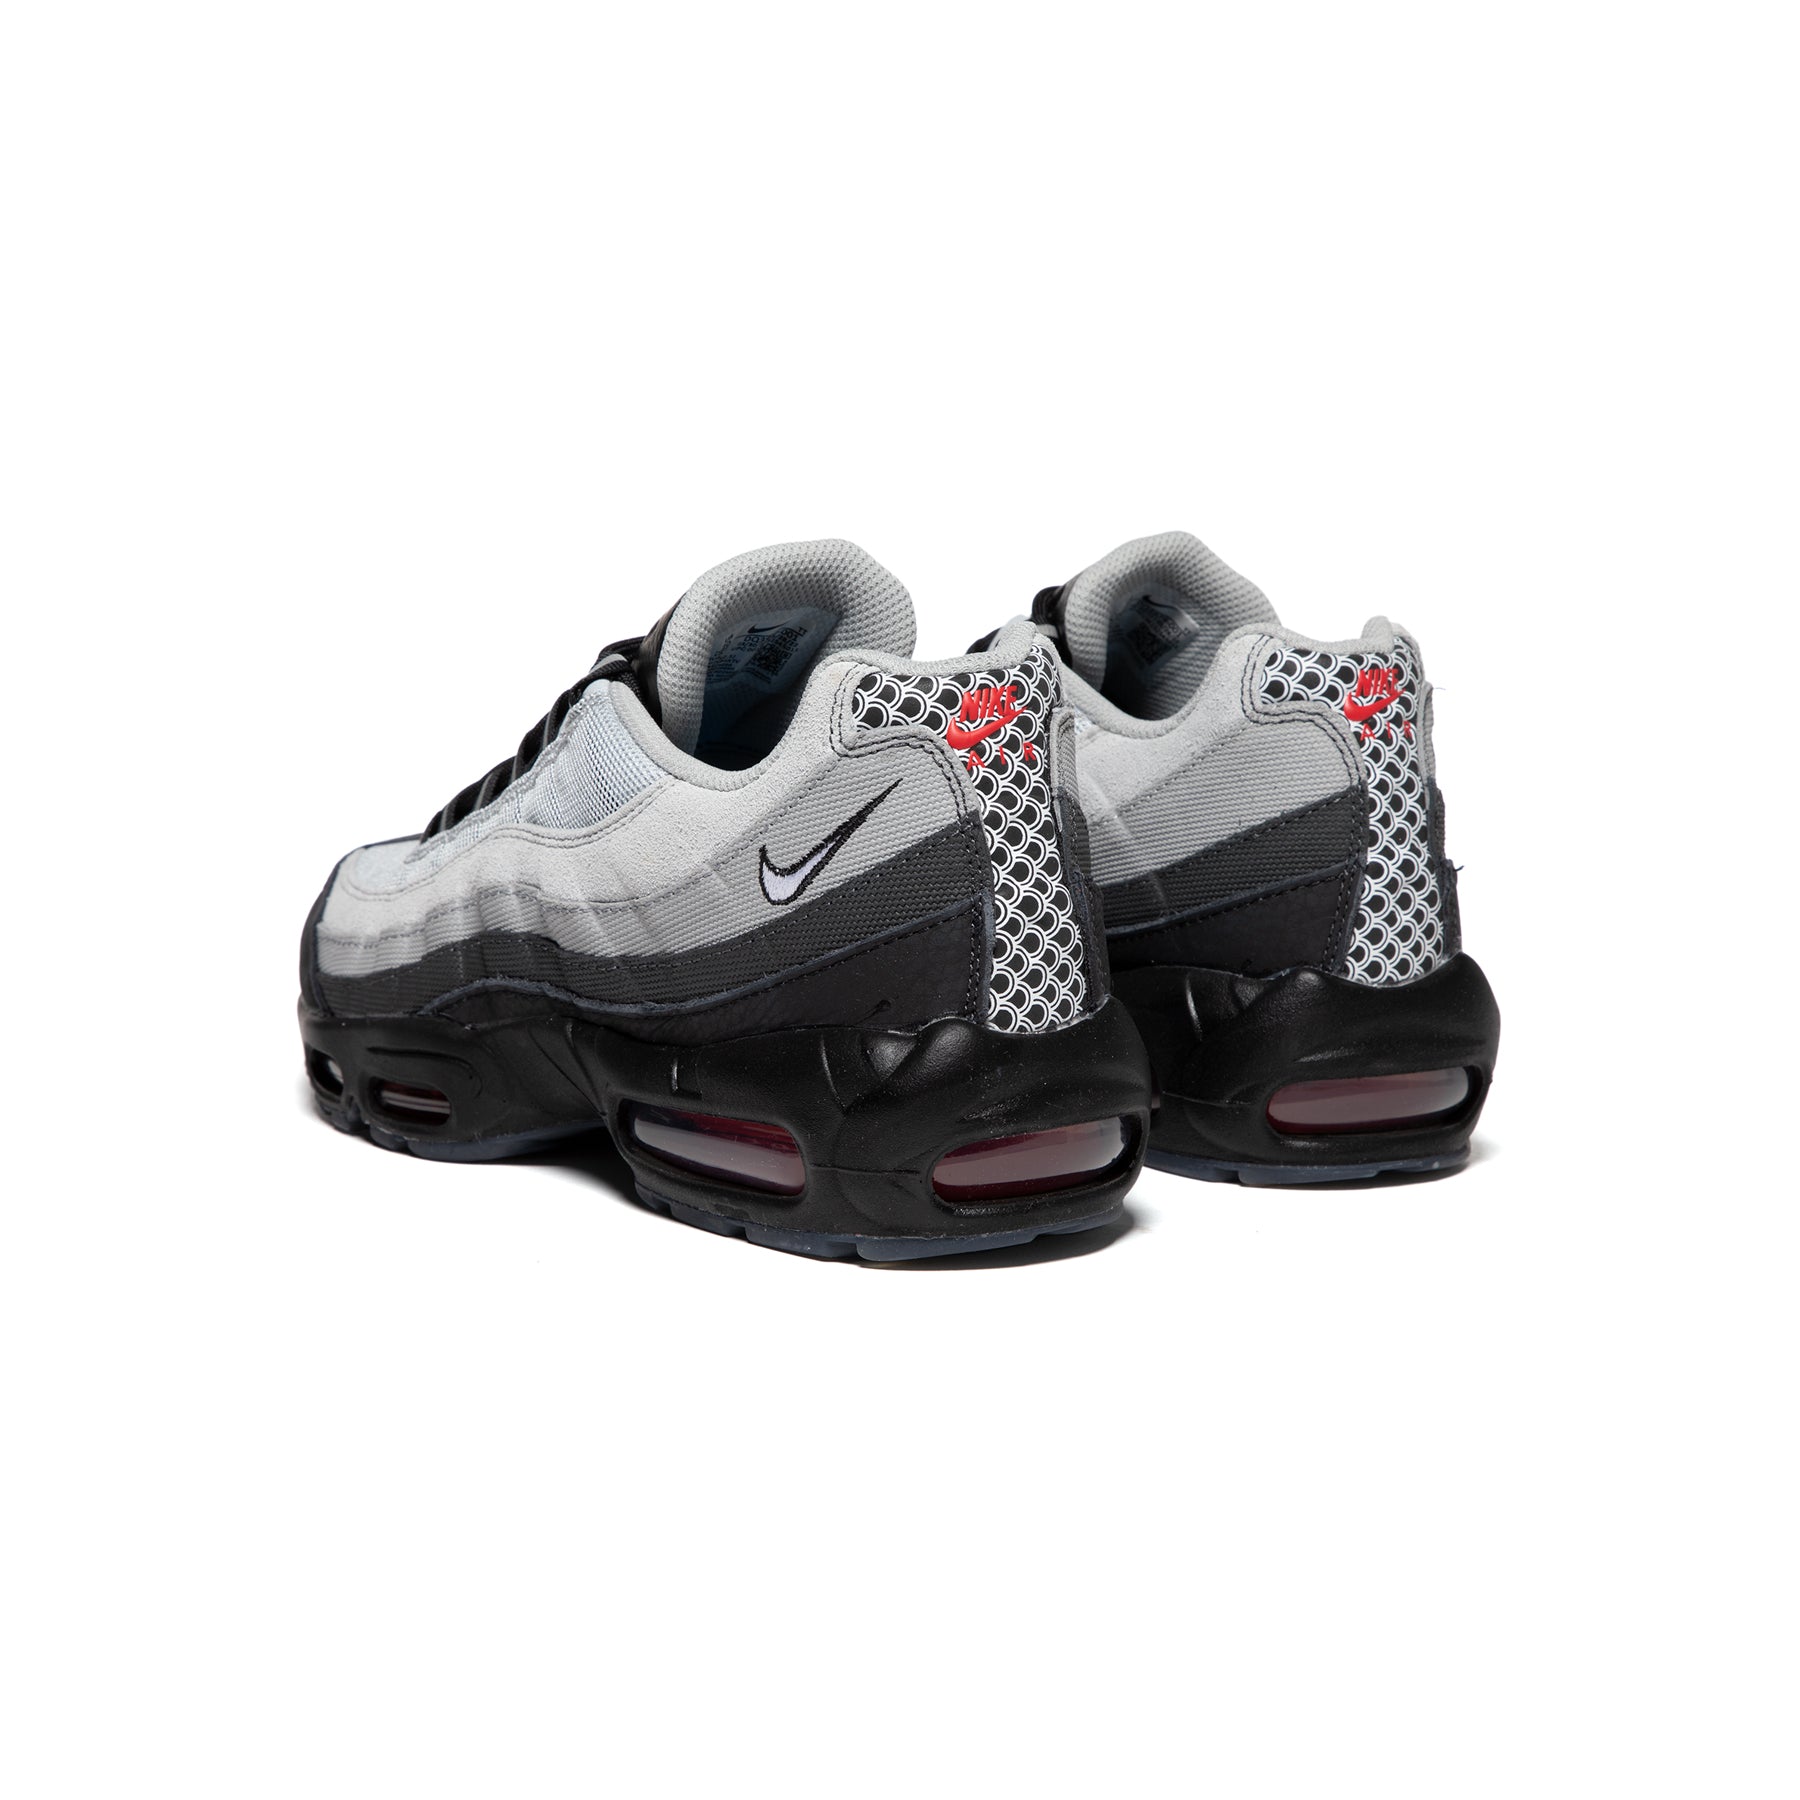 Achternaam herinneringen conjunctie Nike Air Max 95 Premium(Black/White/Pure Platinum/Light Smoke Grey) –  Concepts